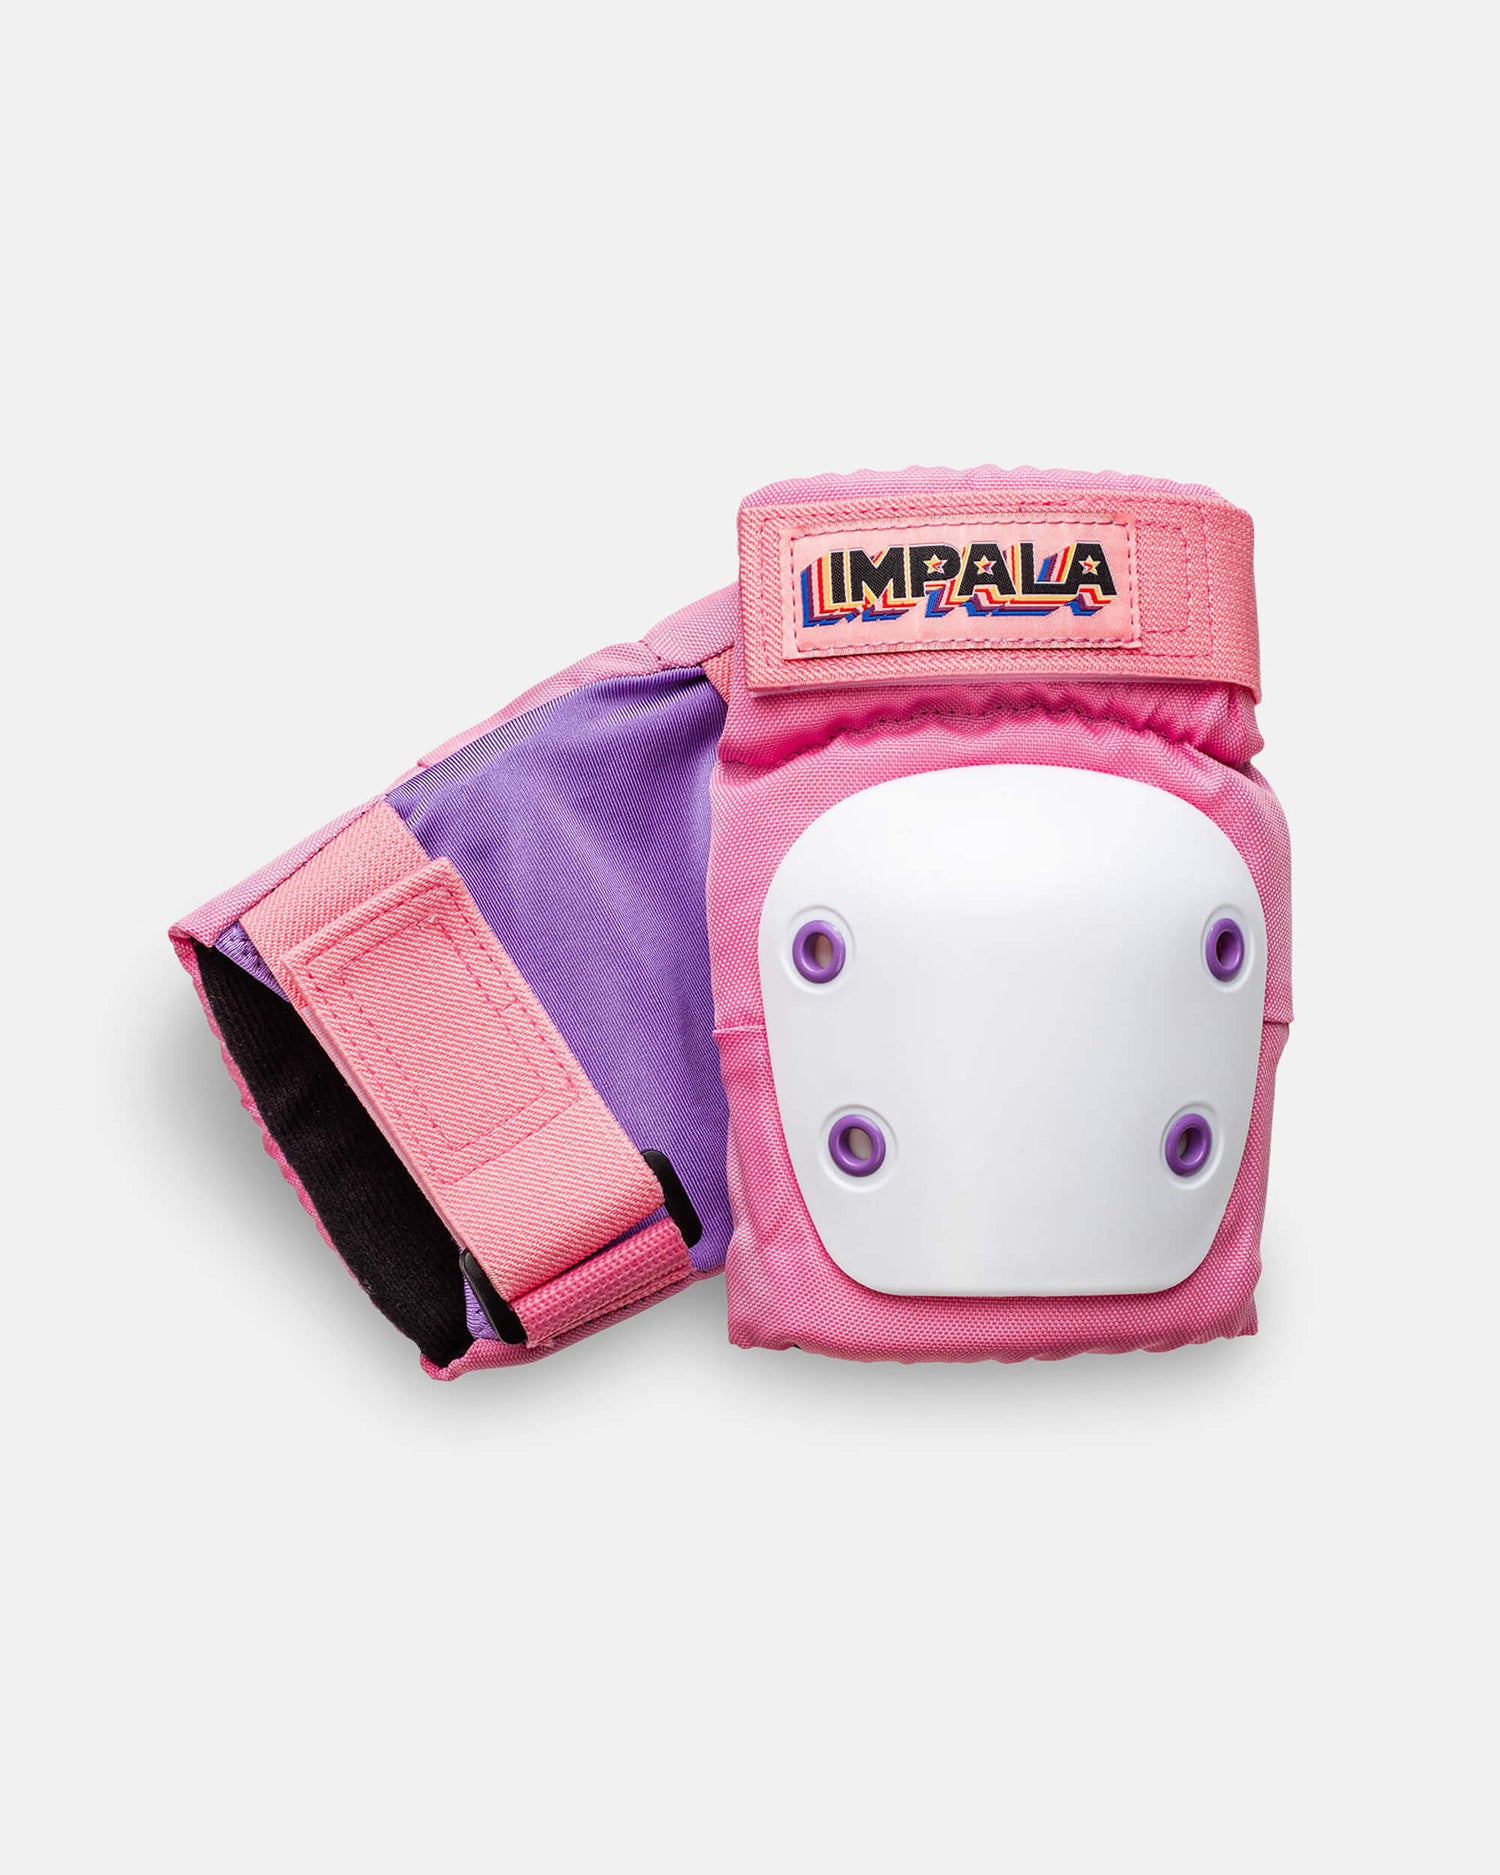 Impala protections Pack de protection pour enfants - Pink in Pink